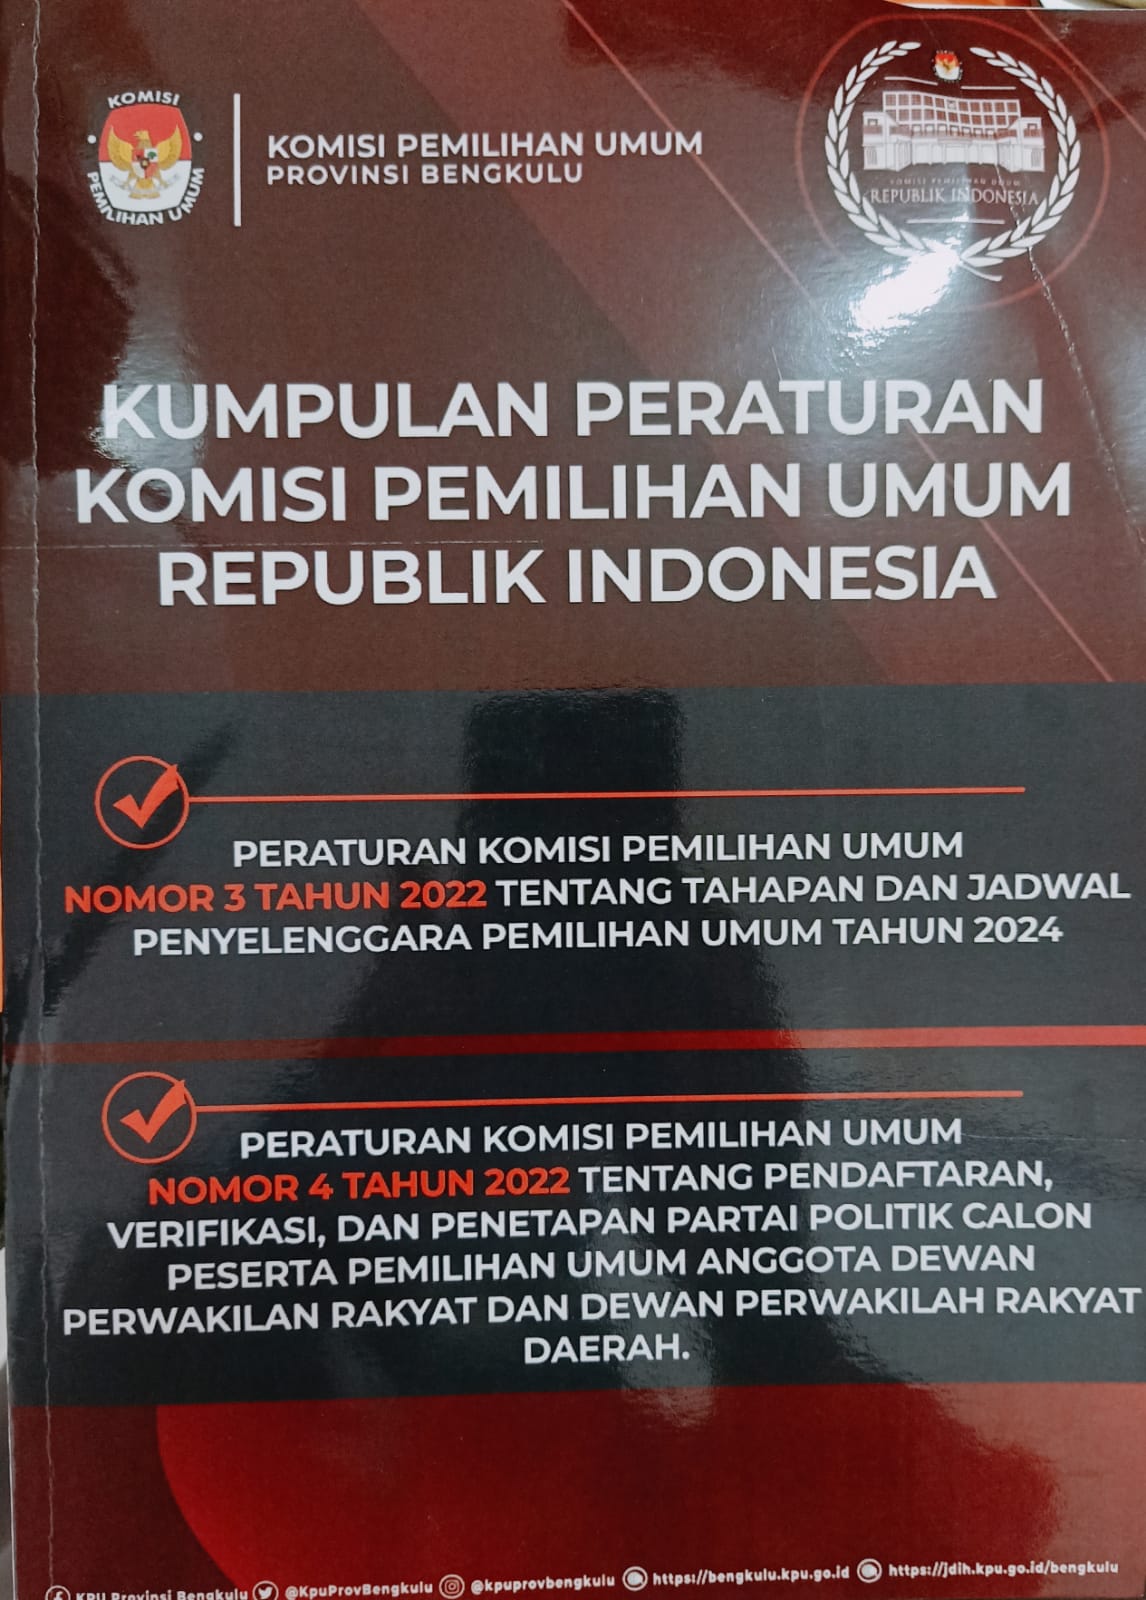 KUMPULAN PERATURAN KOMISI PEMILIHAN UMUM REPUBLIK INDONESIA